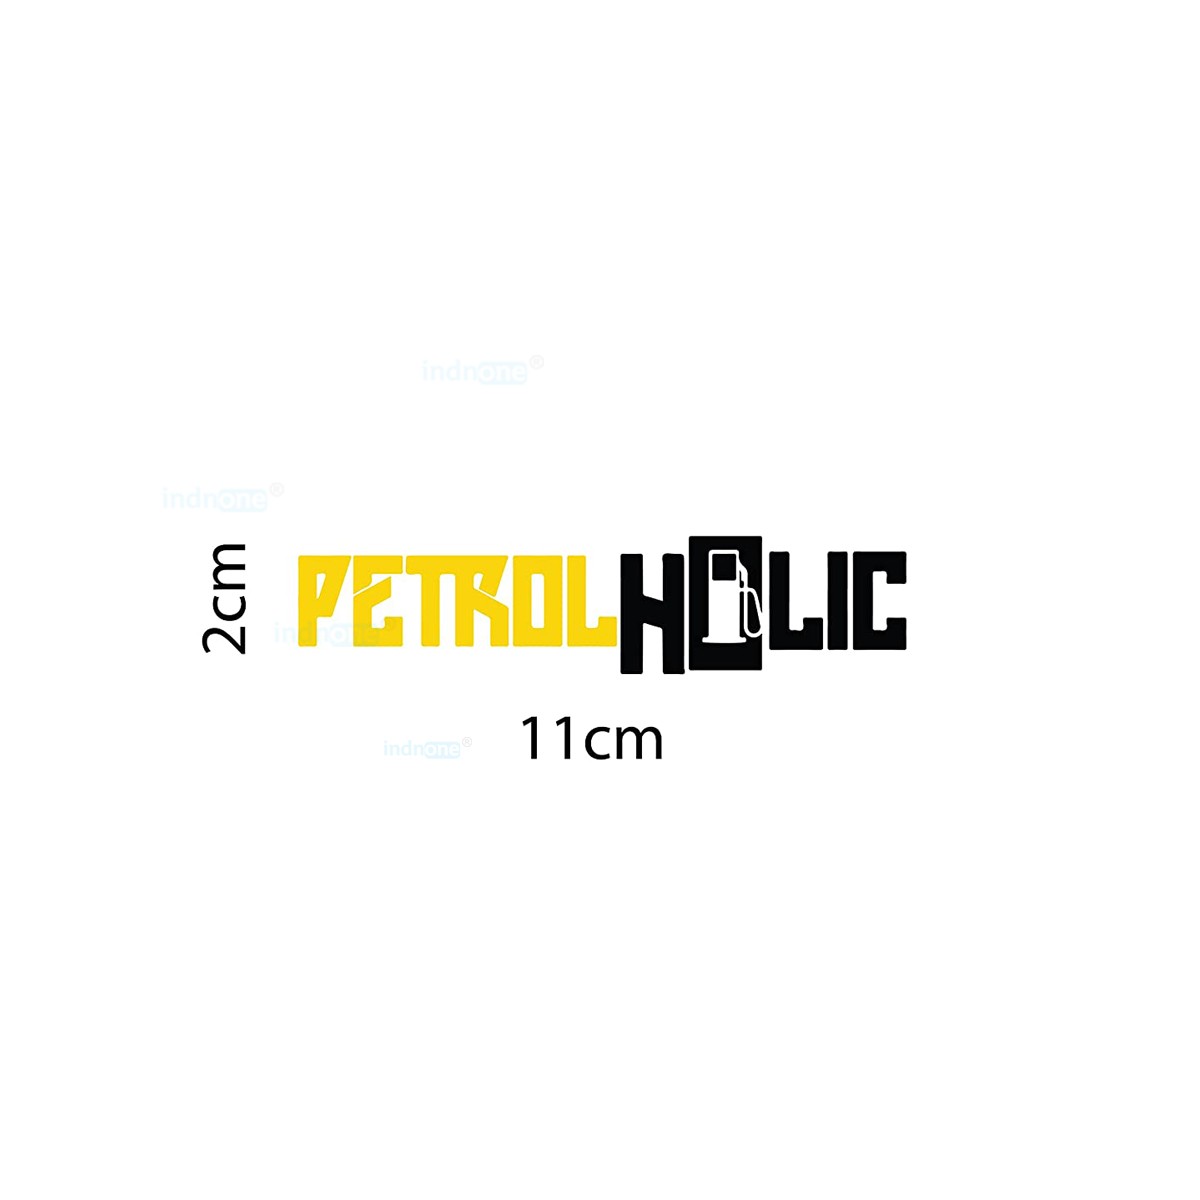 indnone® Petrol Holic Logo Sticker for Car. Car Sticker Stylish Fuel Lid |Black & Yellow Standard Size